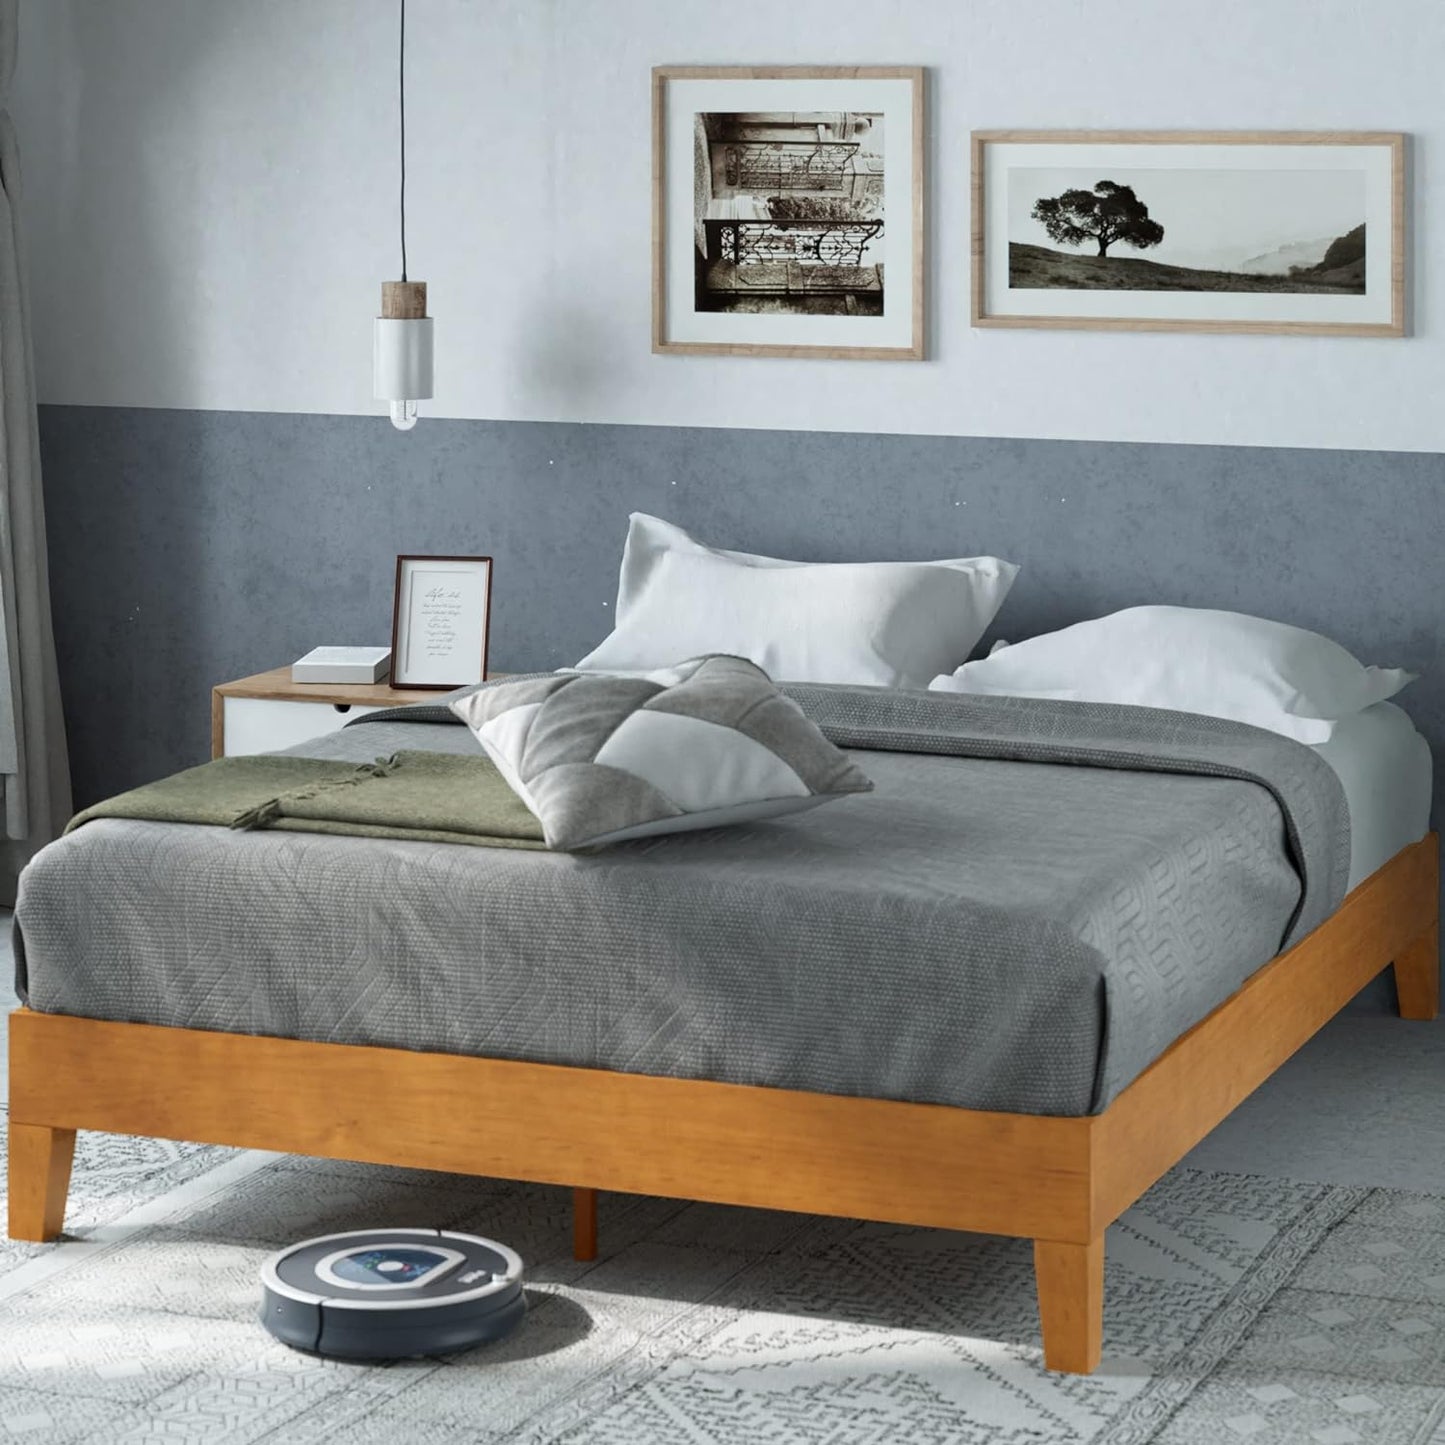 Decorstly Minimalist Wood Platform Mid Century Bed Frame for Bedroom Decor Essential